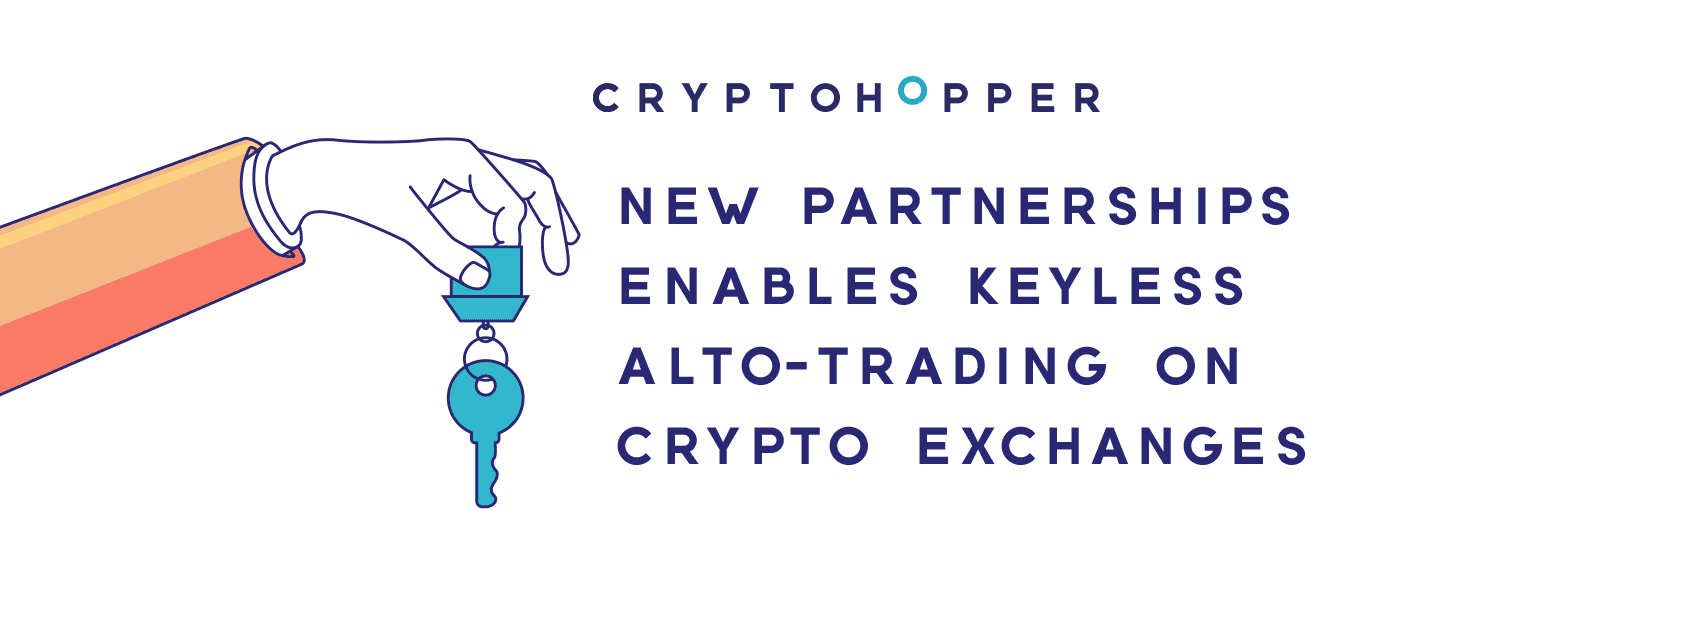 New Partnership Enables Keyless Algo-Trading on Crypto Exchanges